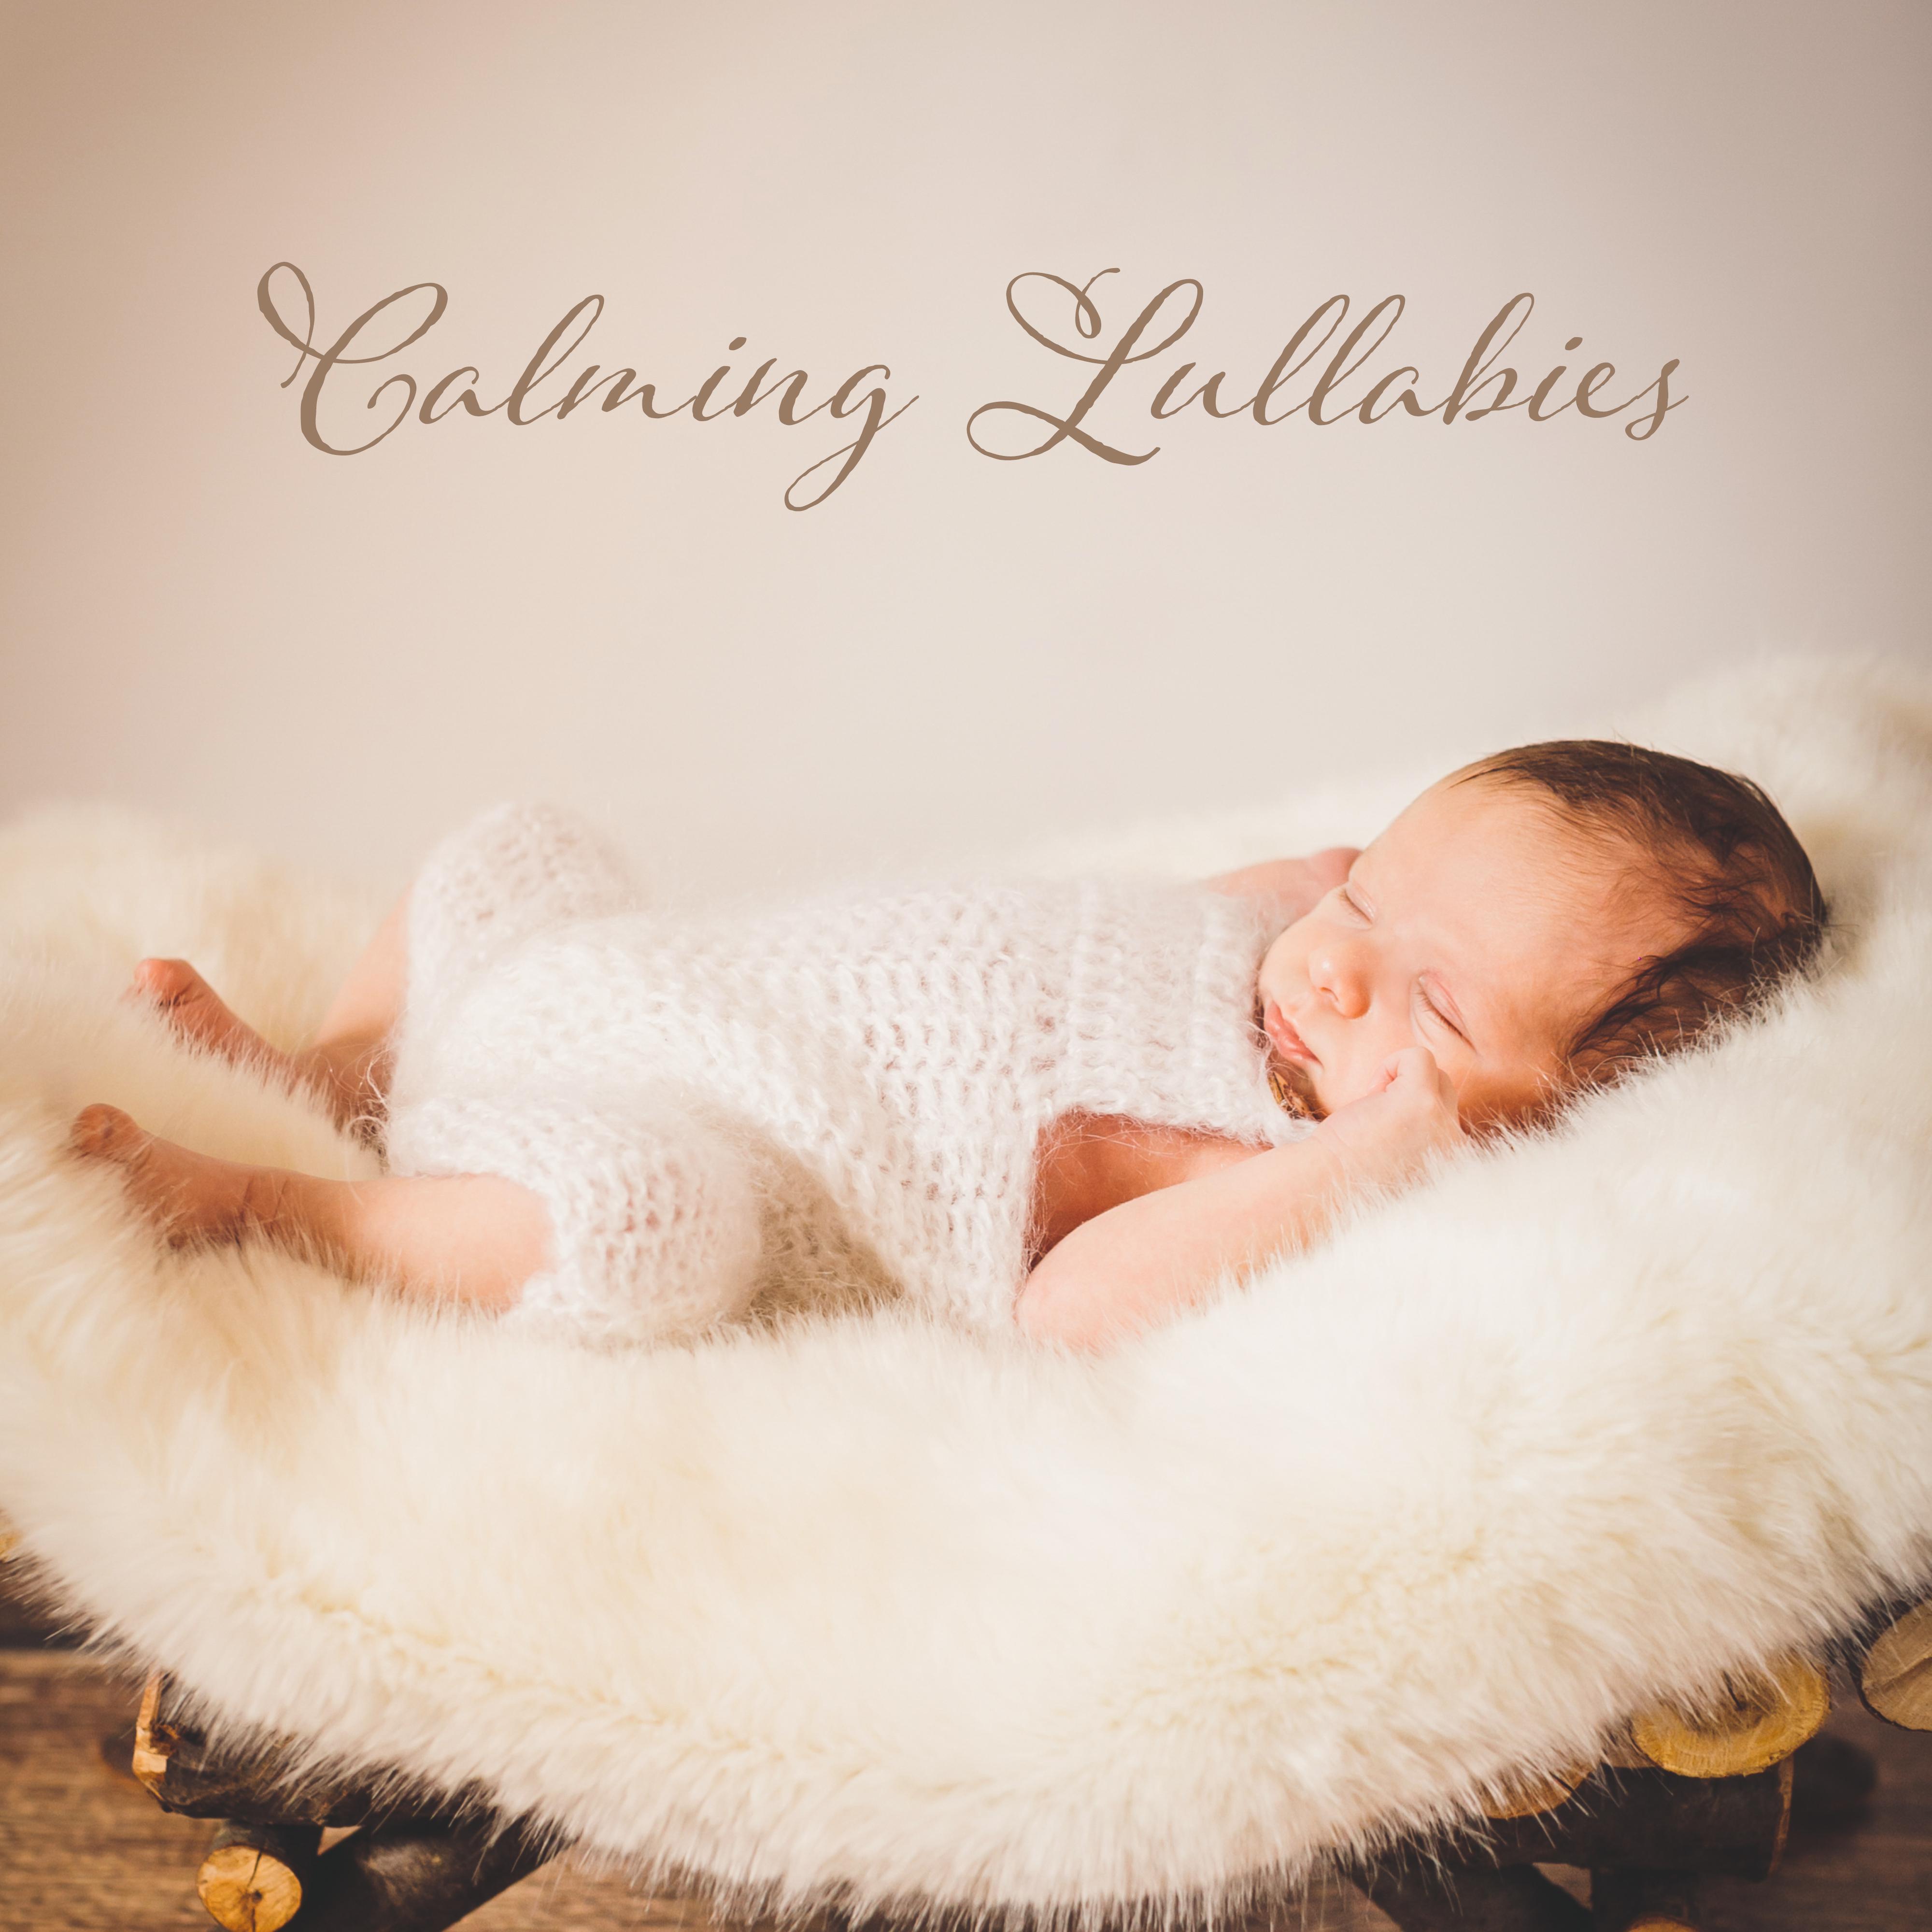 Calming Lullabies 2019  Baby Music, Deeper Sleep, Relaxation, Cradle Songs, Lullabies Mix at Night